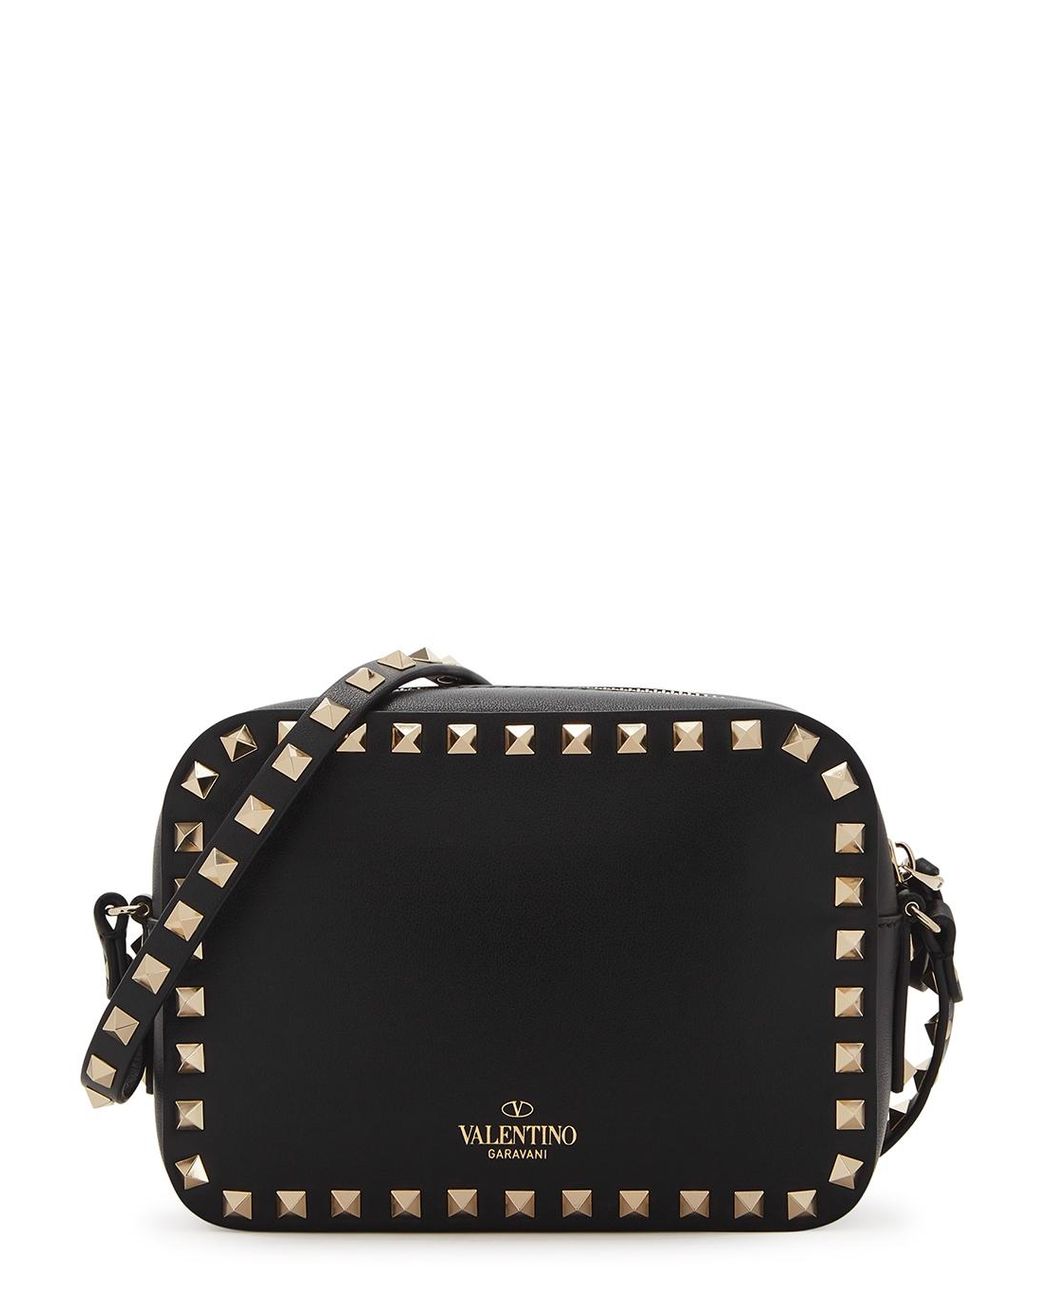 Valentino Rockstud Black Leather Cross-body Bag - Lyst